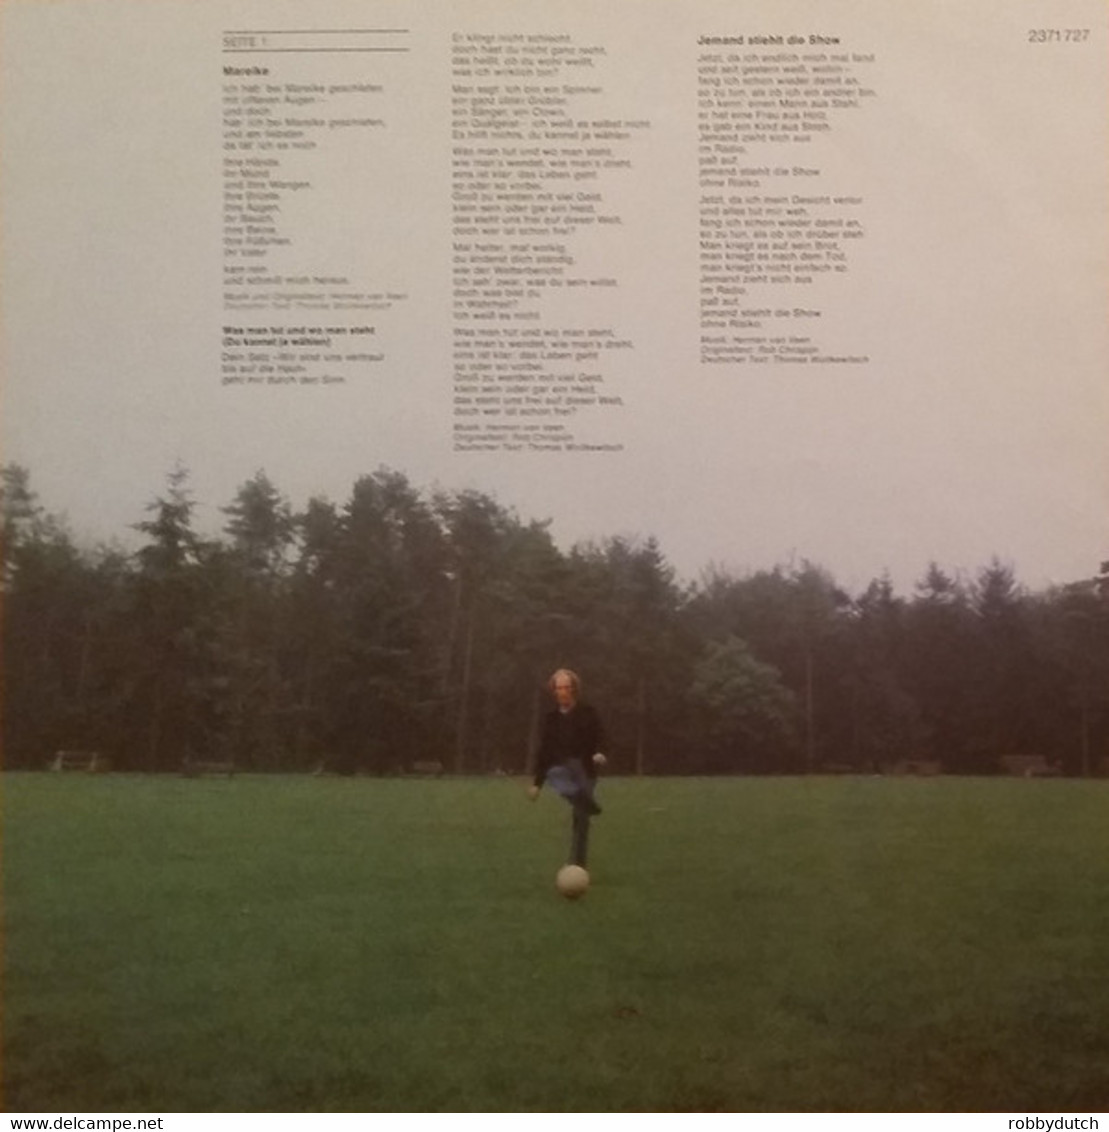 * LP *  HERMAN VAN VEEN - AN EINE FERNE PRINZESSIN (Germany 1977) - Other - German Music